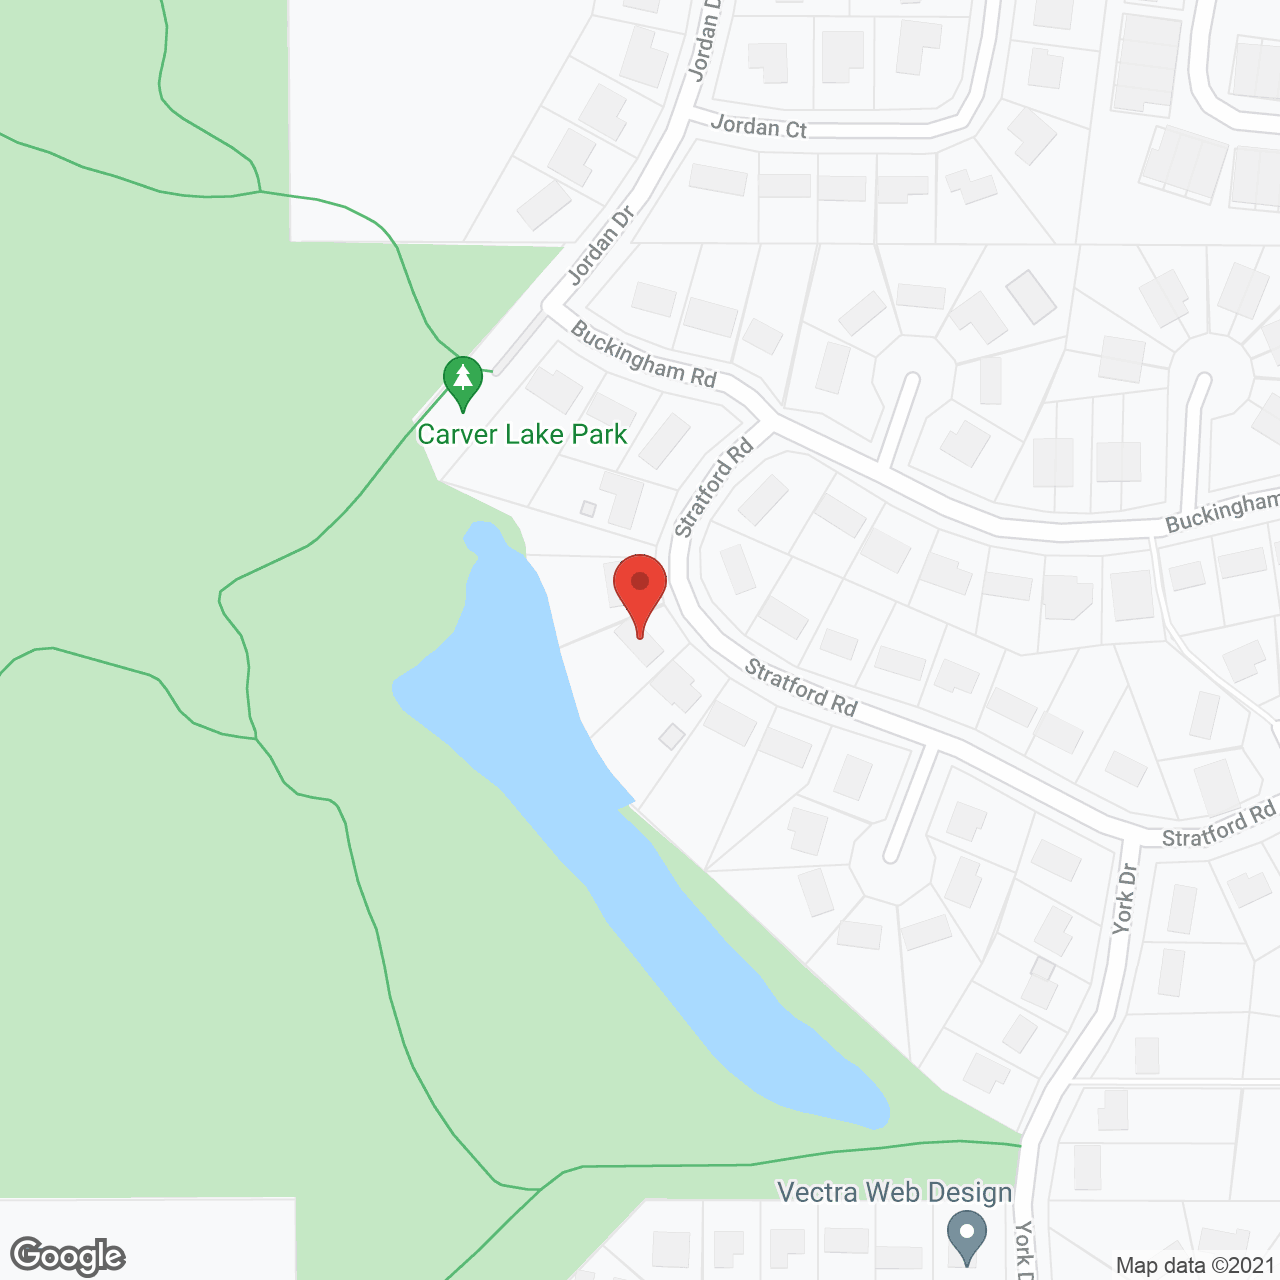 CLO - Stratford in google map